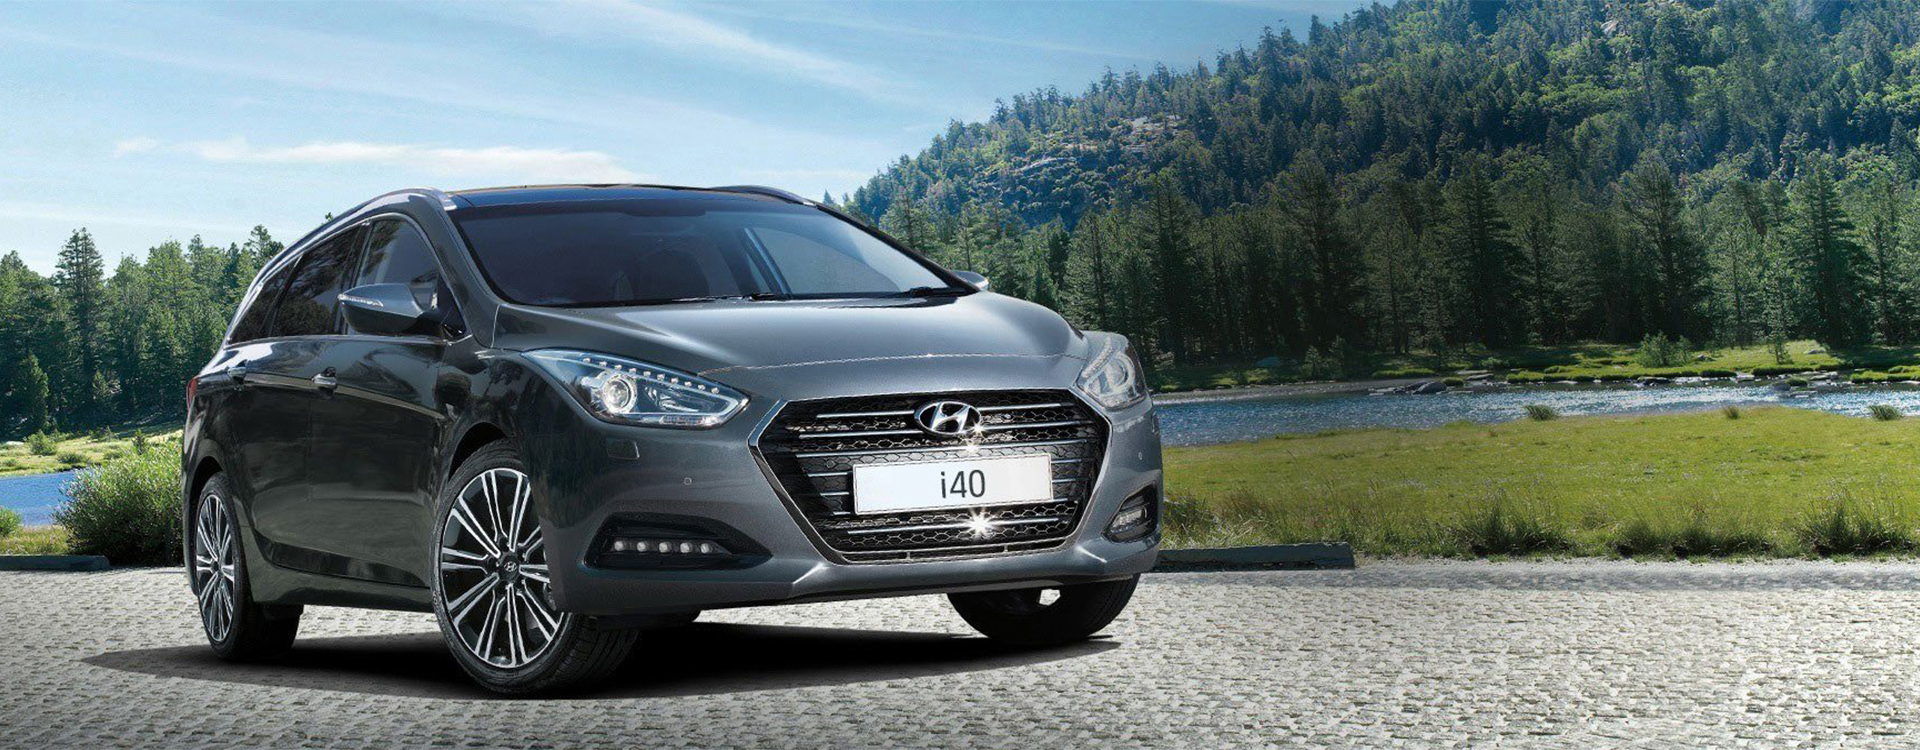 Kia | Hyundai | Auto servis | Originalni delovi